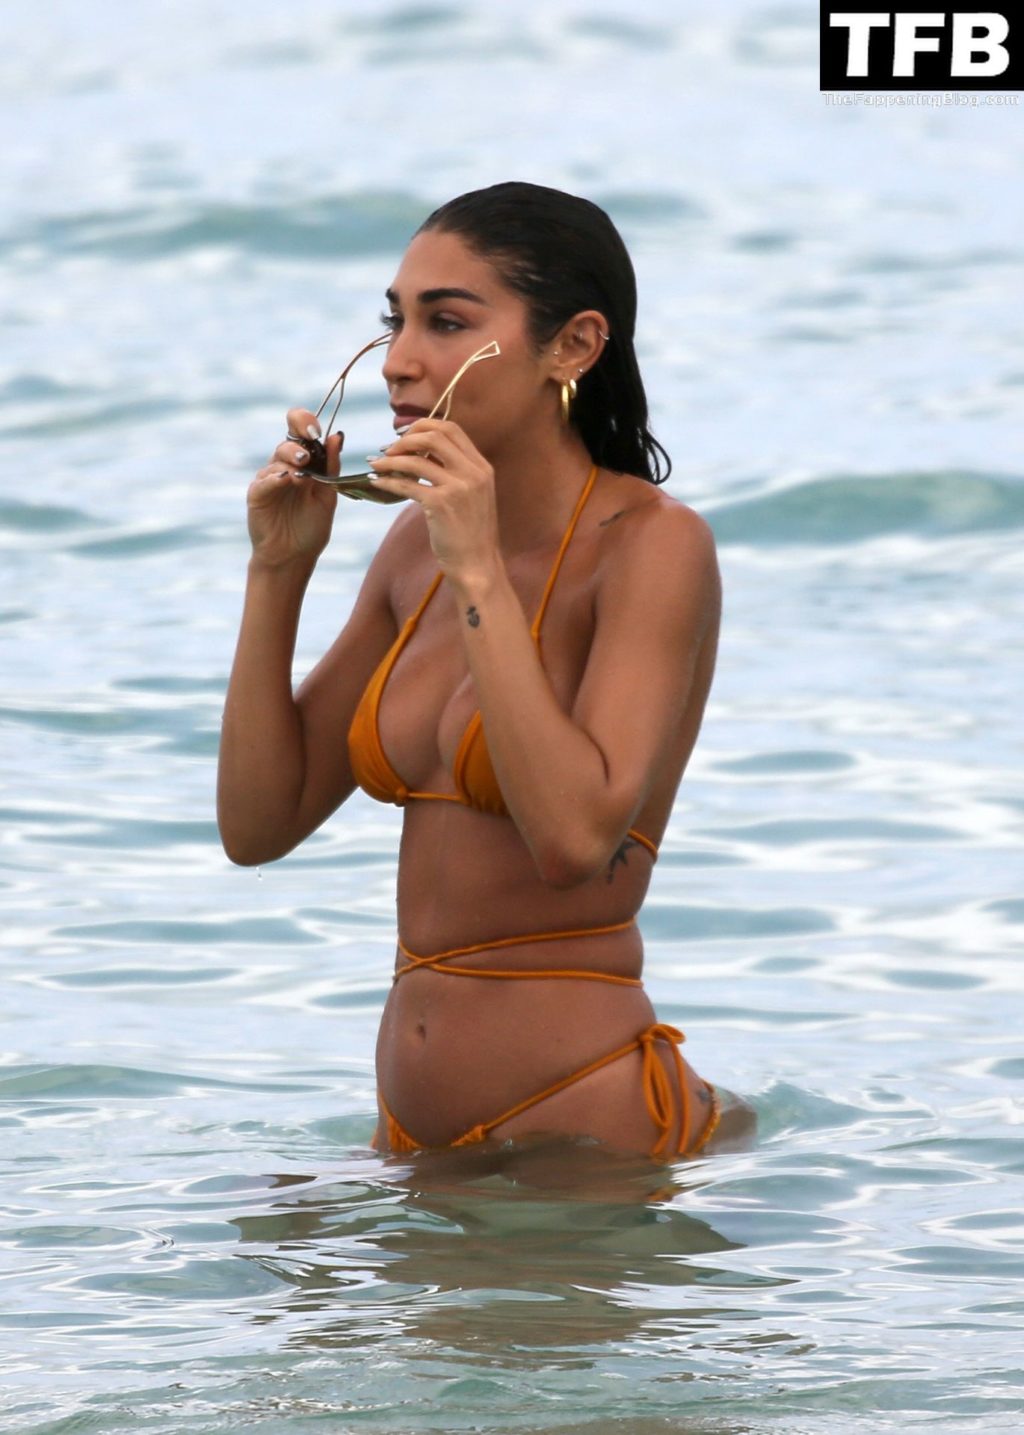 Chantel Jeffries Sexy The Fappening Blog 24 1024x1435 - Chantel Jeffries Shows Off Her Beach Body in an Orange Bikini in Miami (46 Photos)